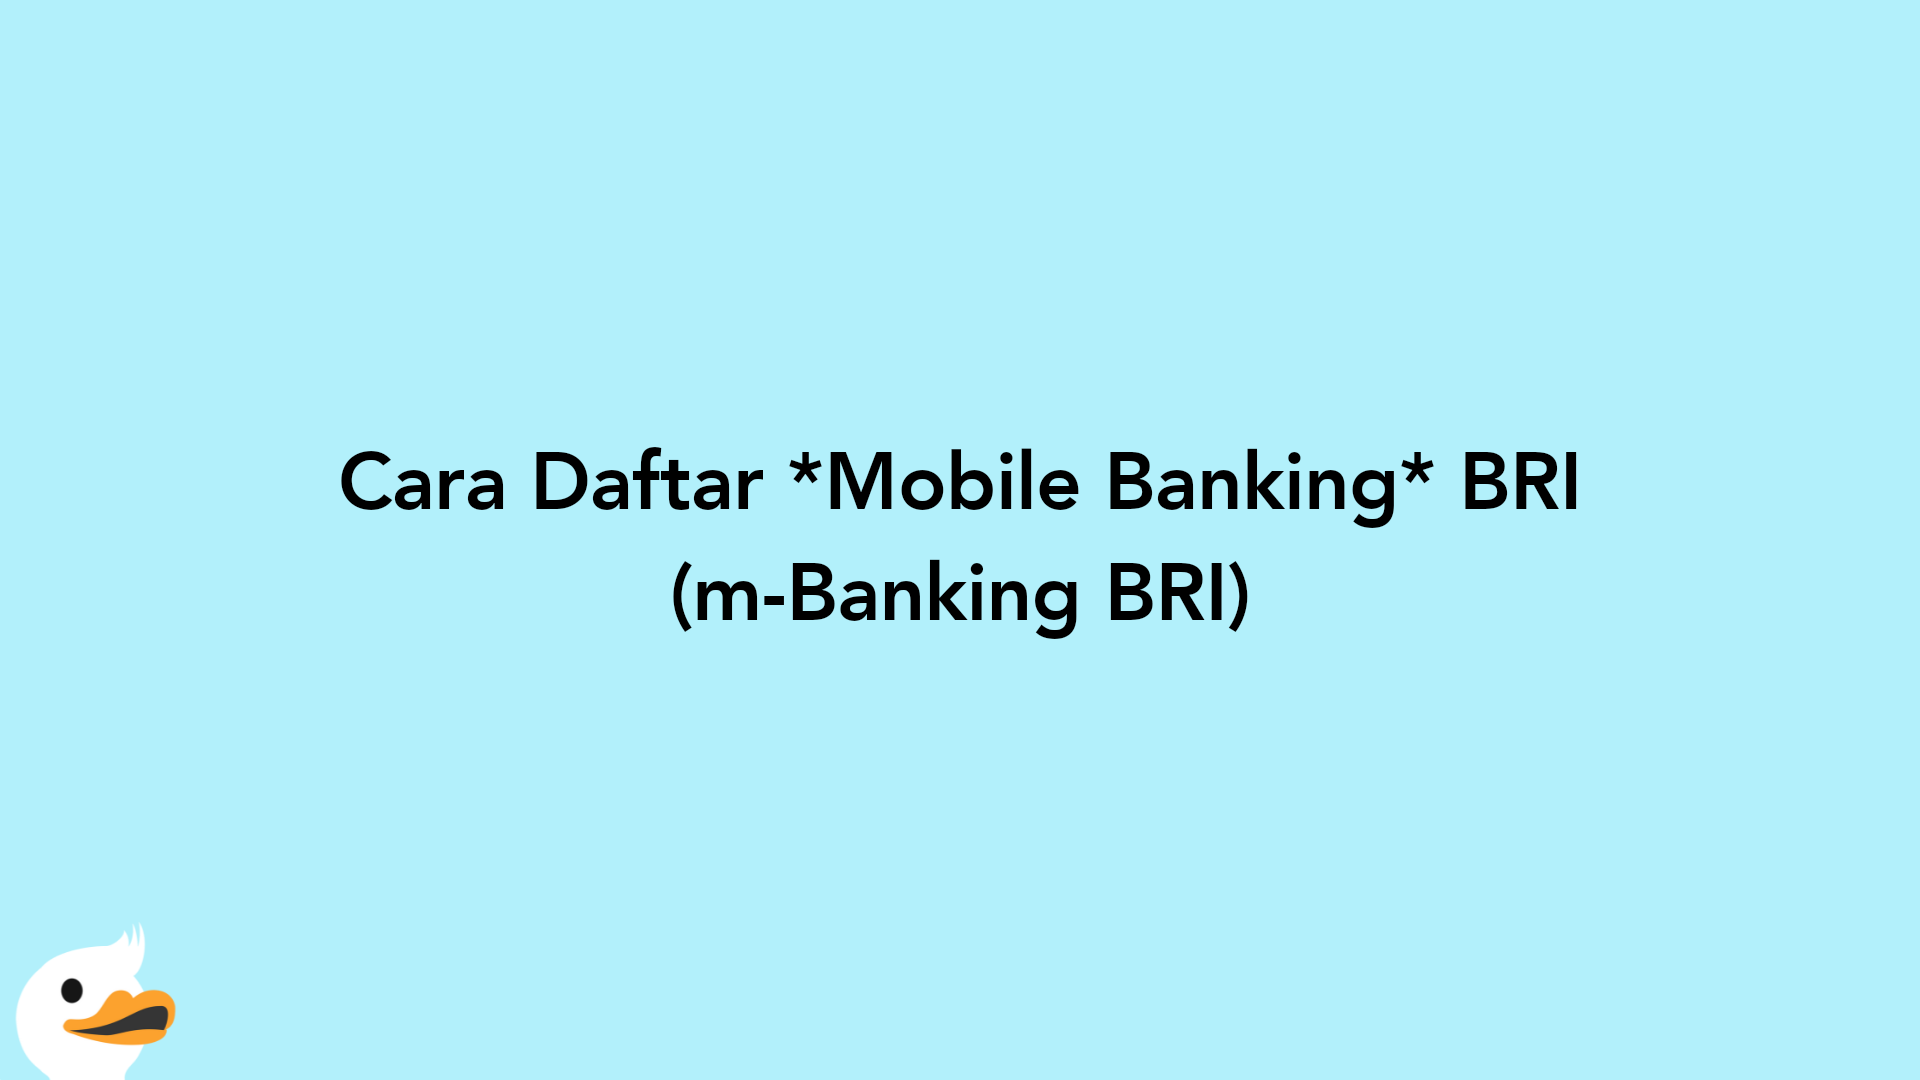 Cara Daftar Mobile Banking BRI (m-Banking BRI)